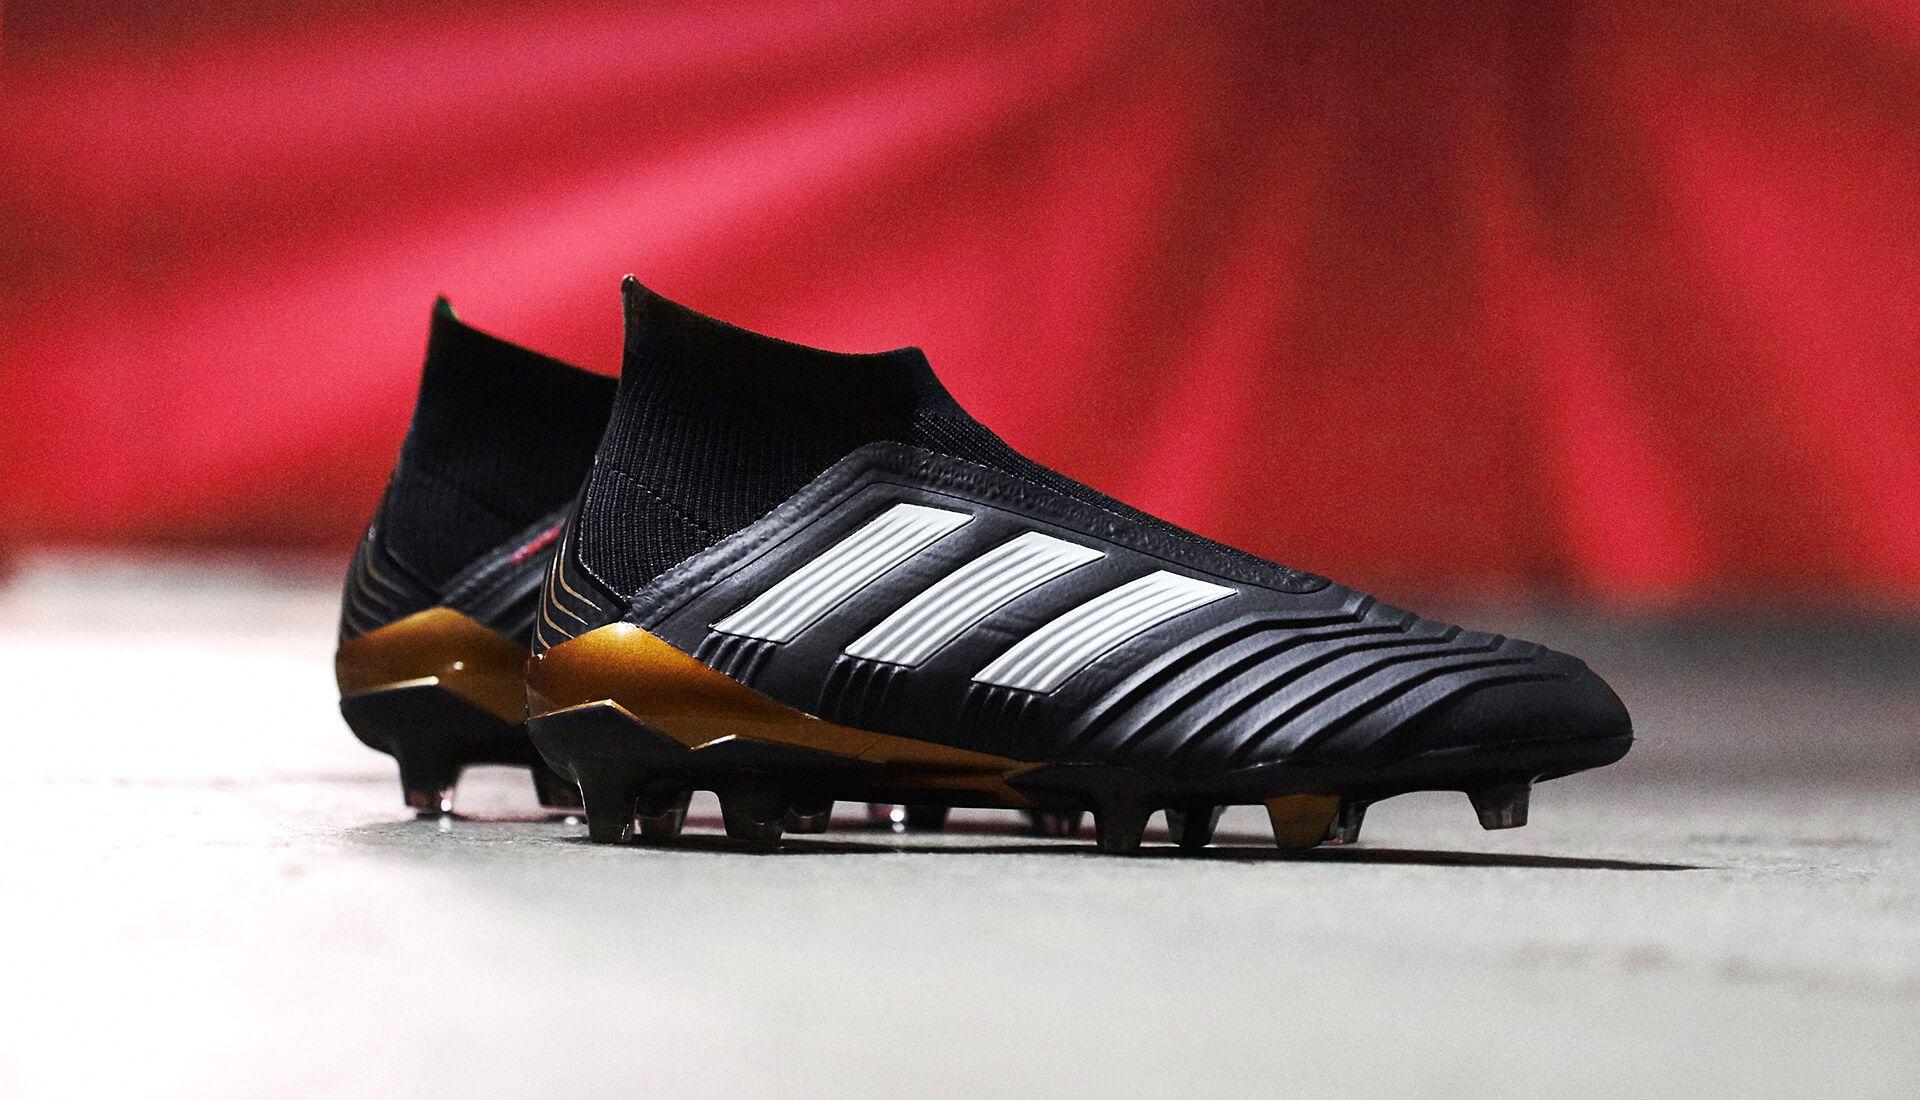 adidas Launch the Predator 18+ Football Boots